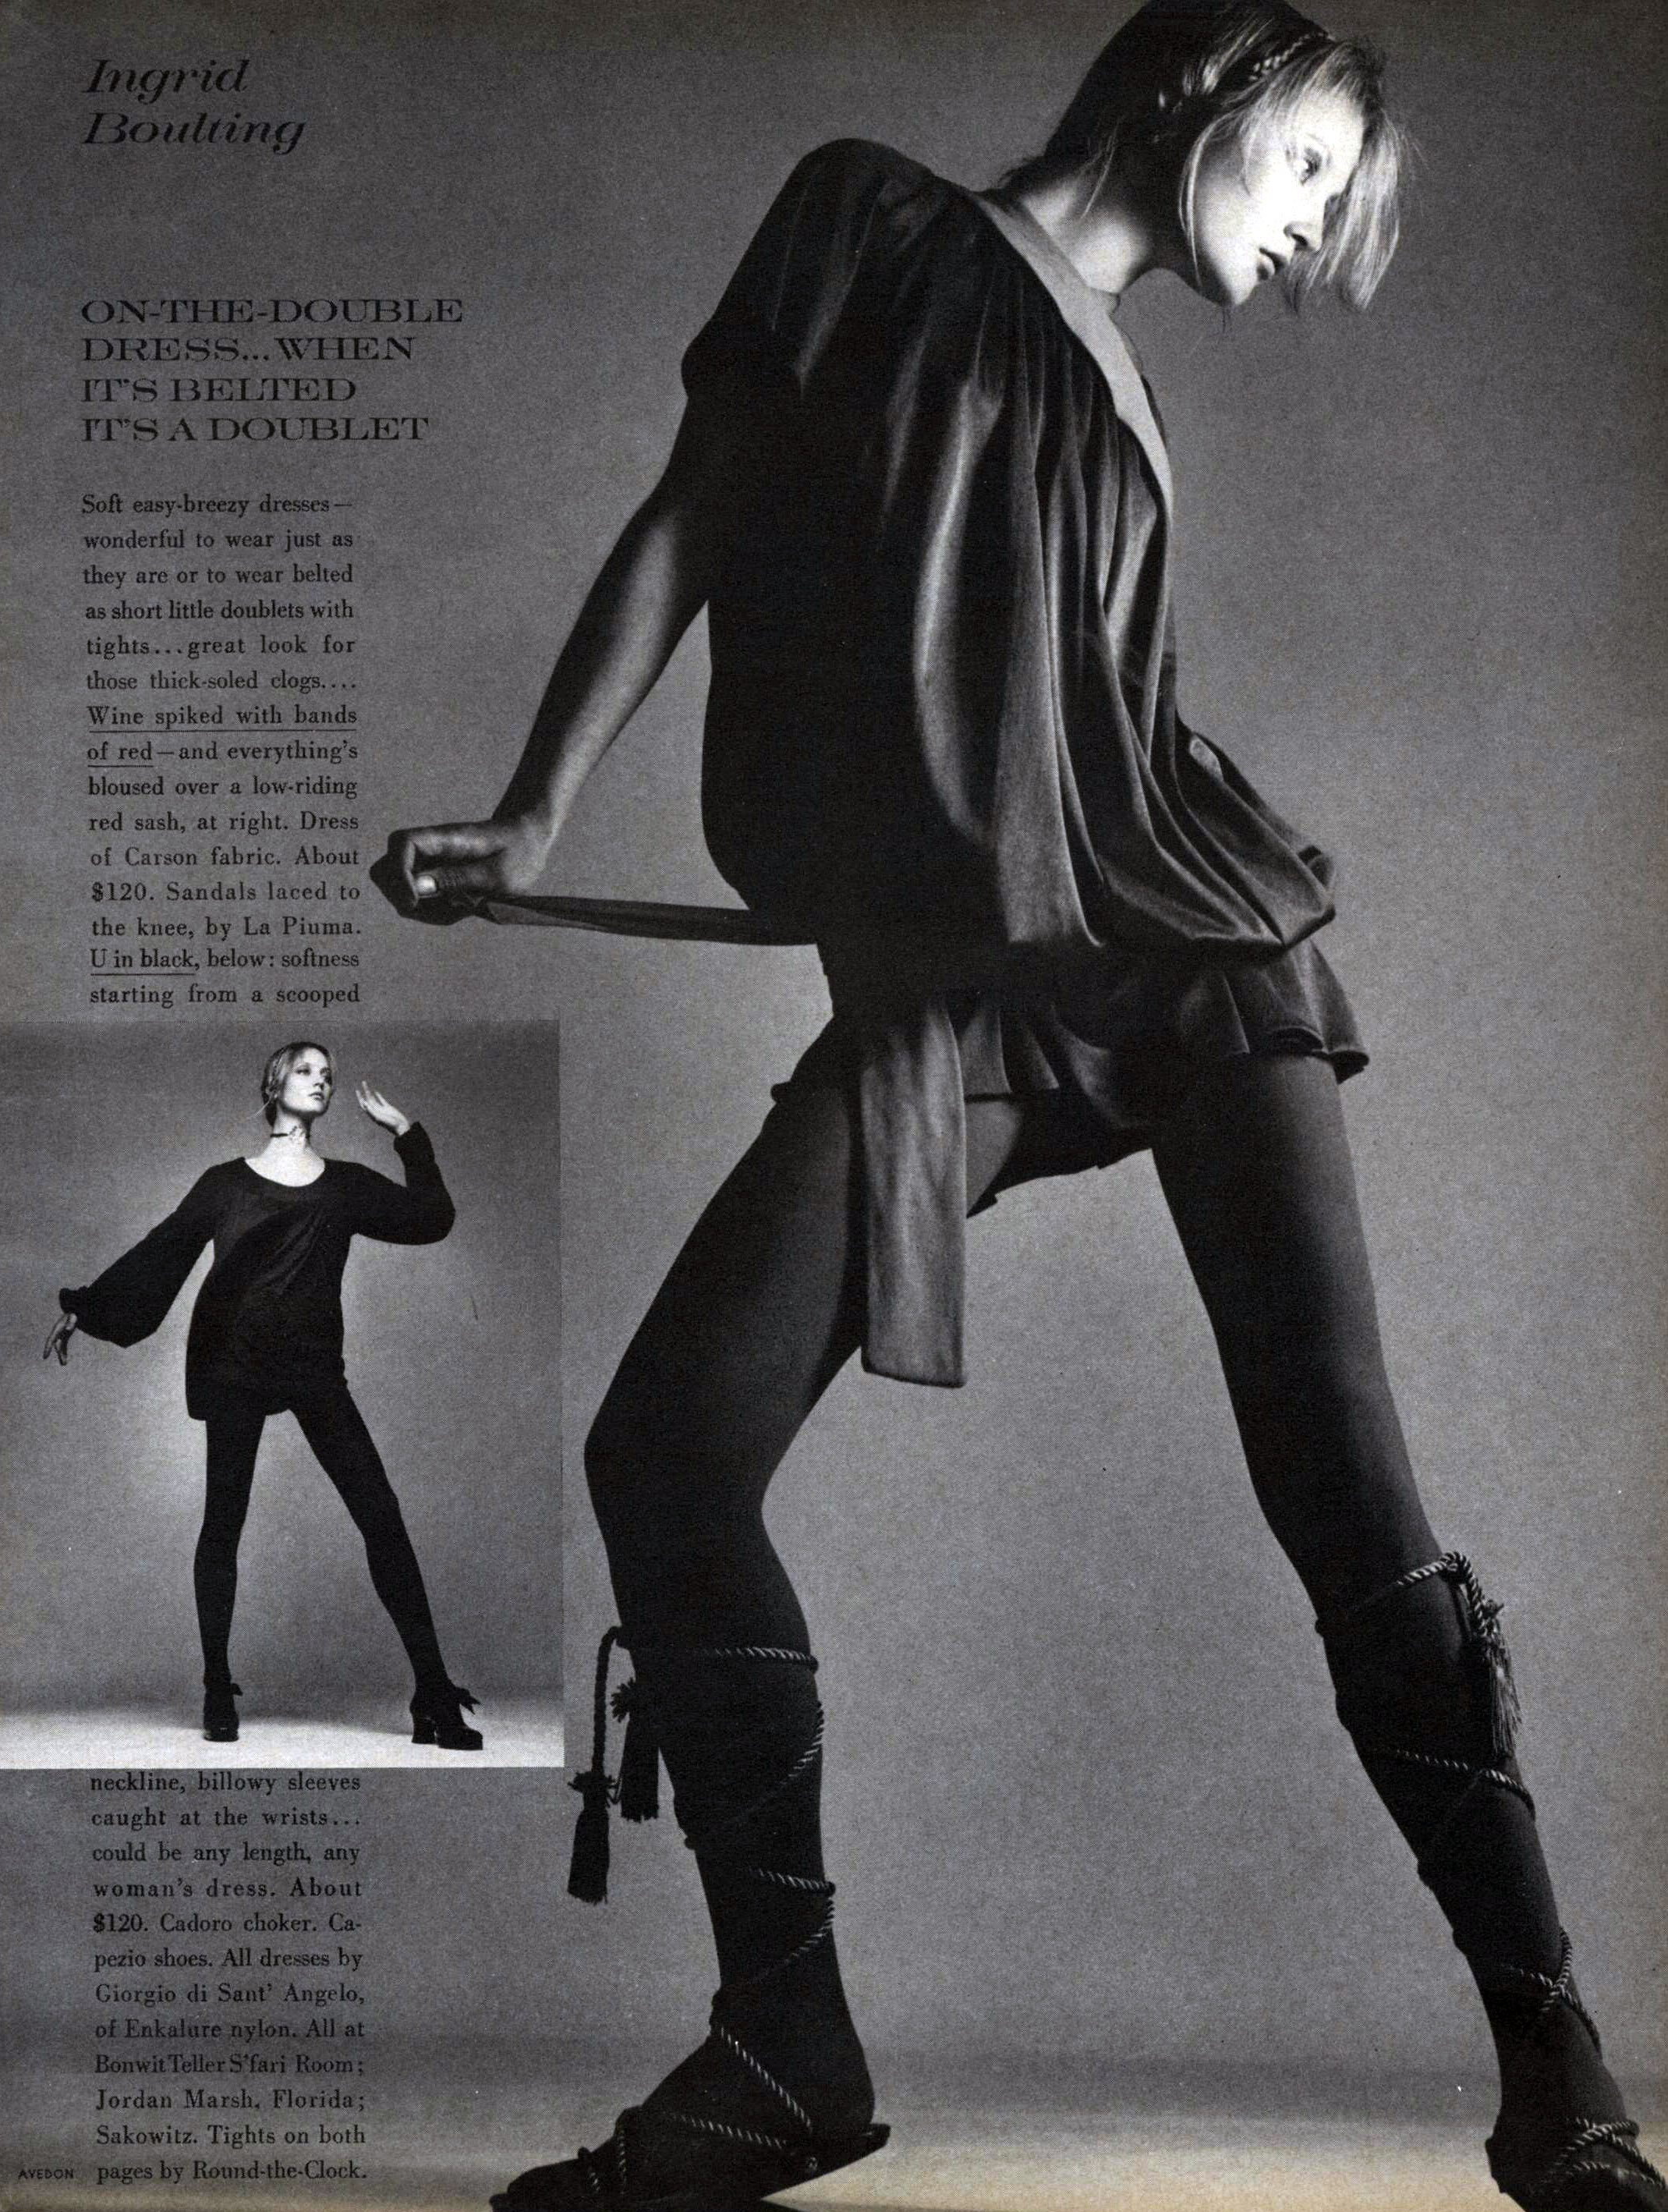 Dancerlike Ingrid photographed by Richard Avedon for Vogue, October 15th, 1969.